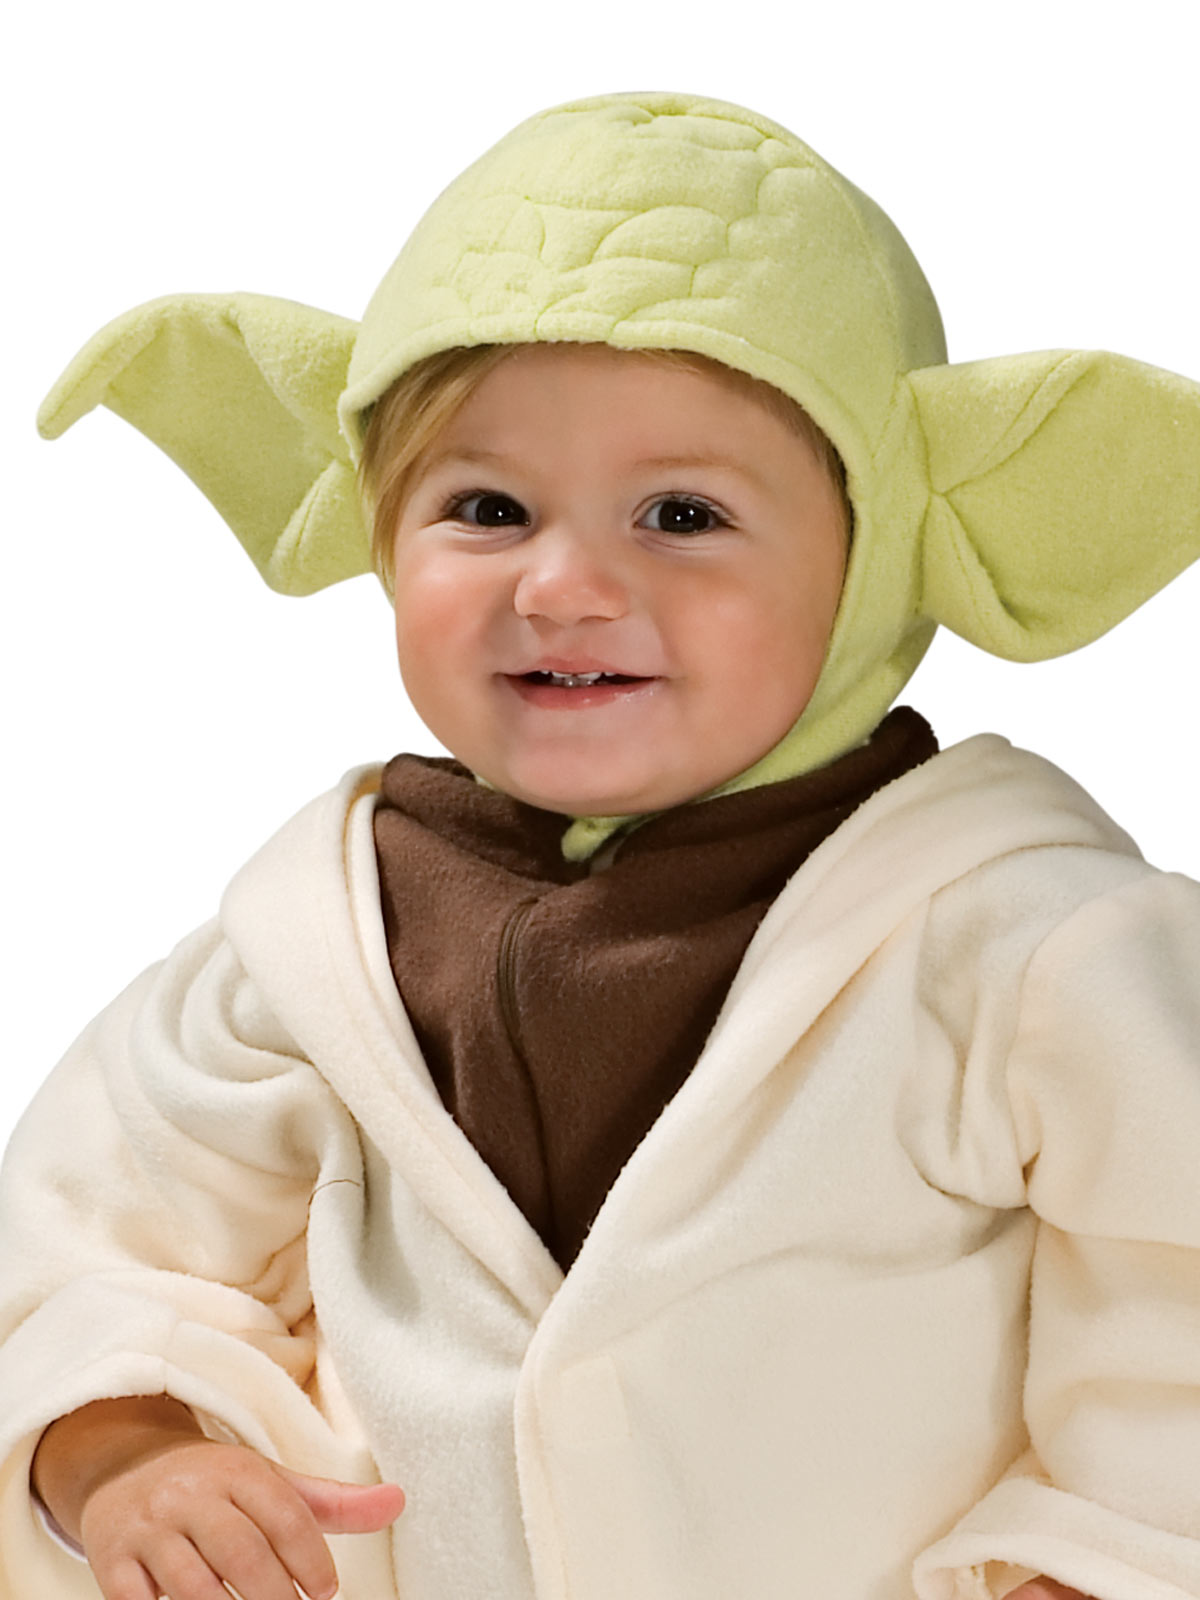 Star Wars Yoda Toddler Costume - LIcensed